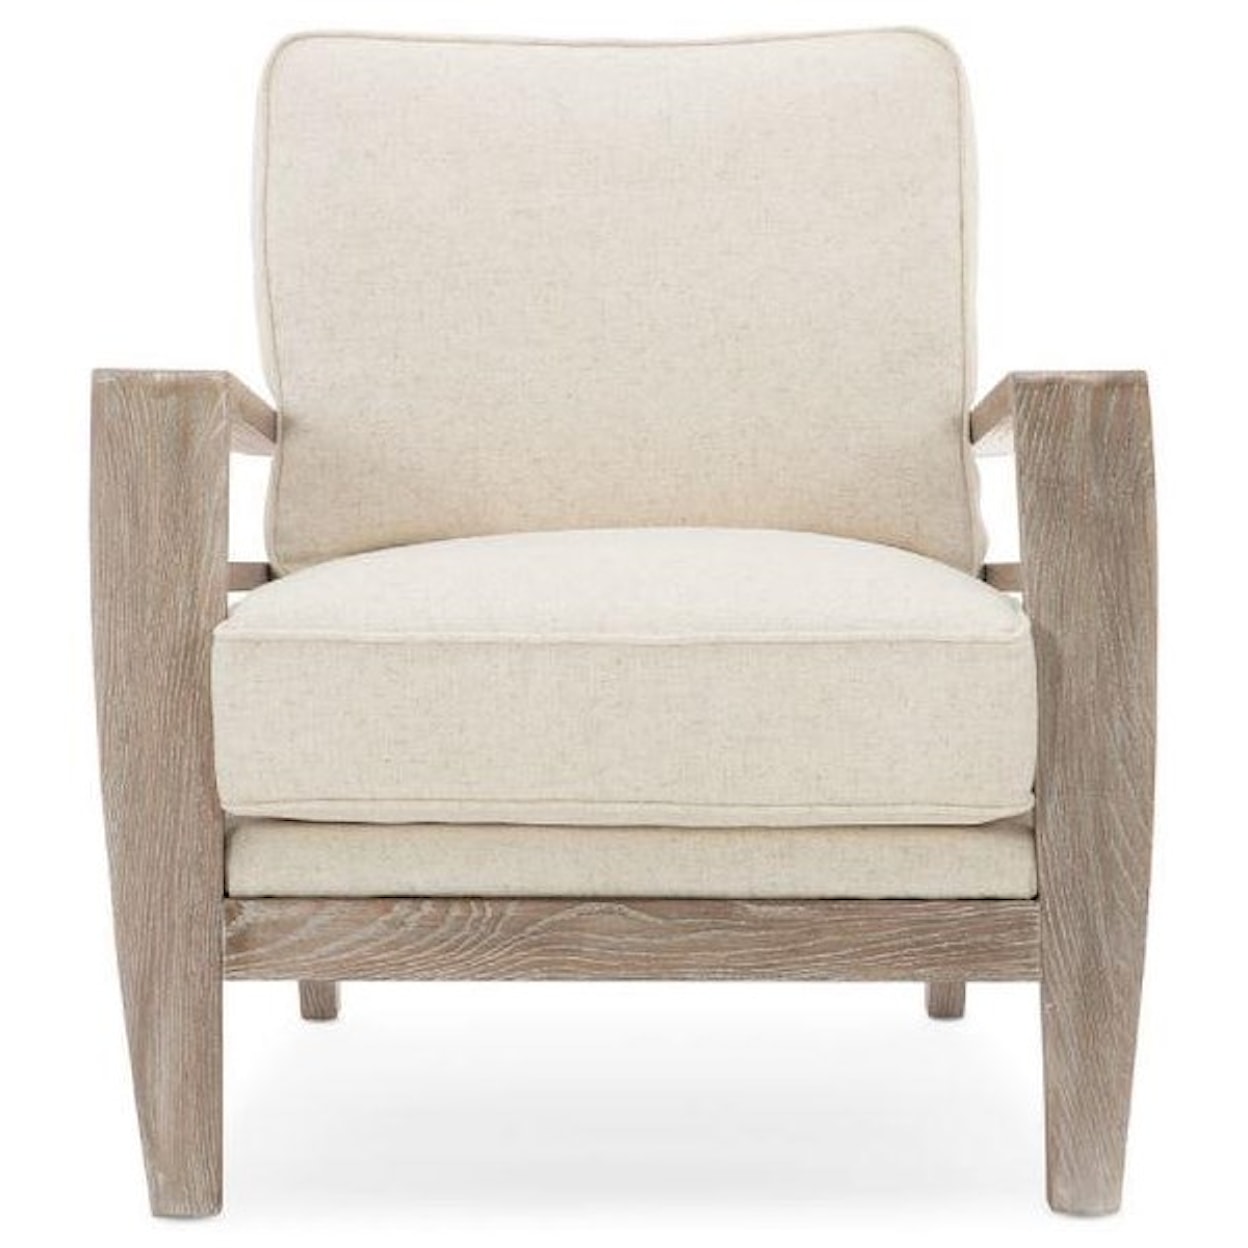 Caracole Caracole Upholstery Slatitude Chair